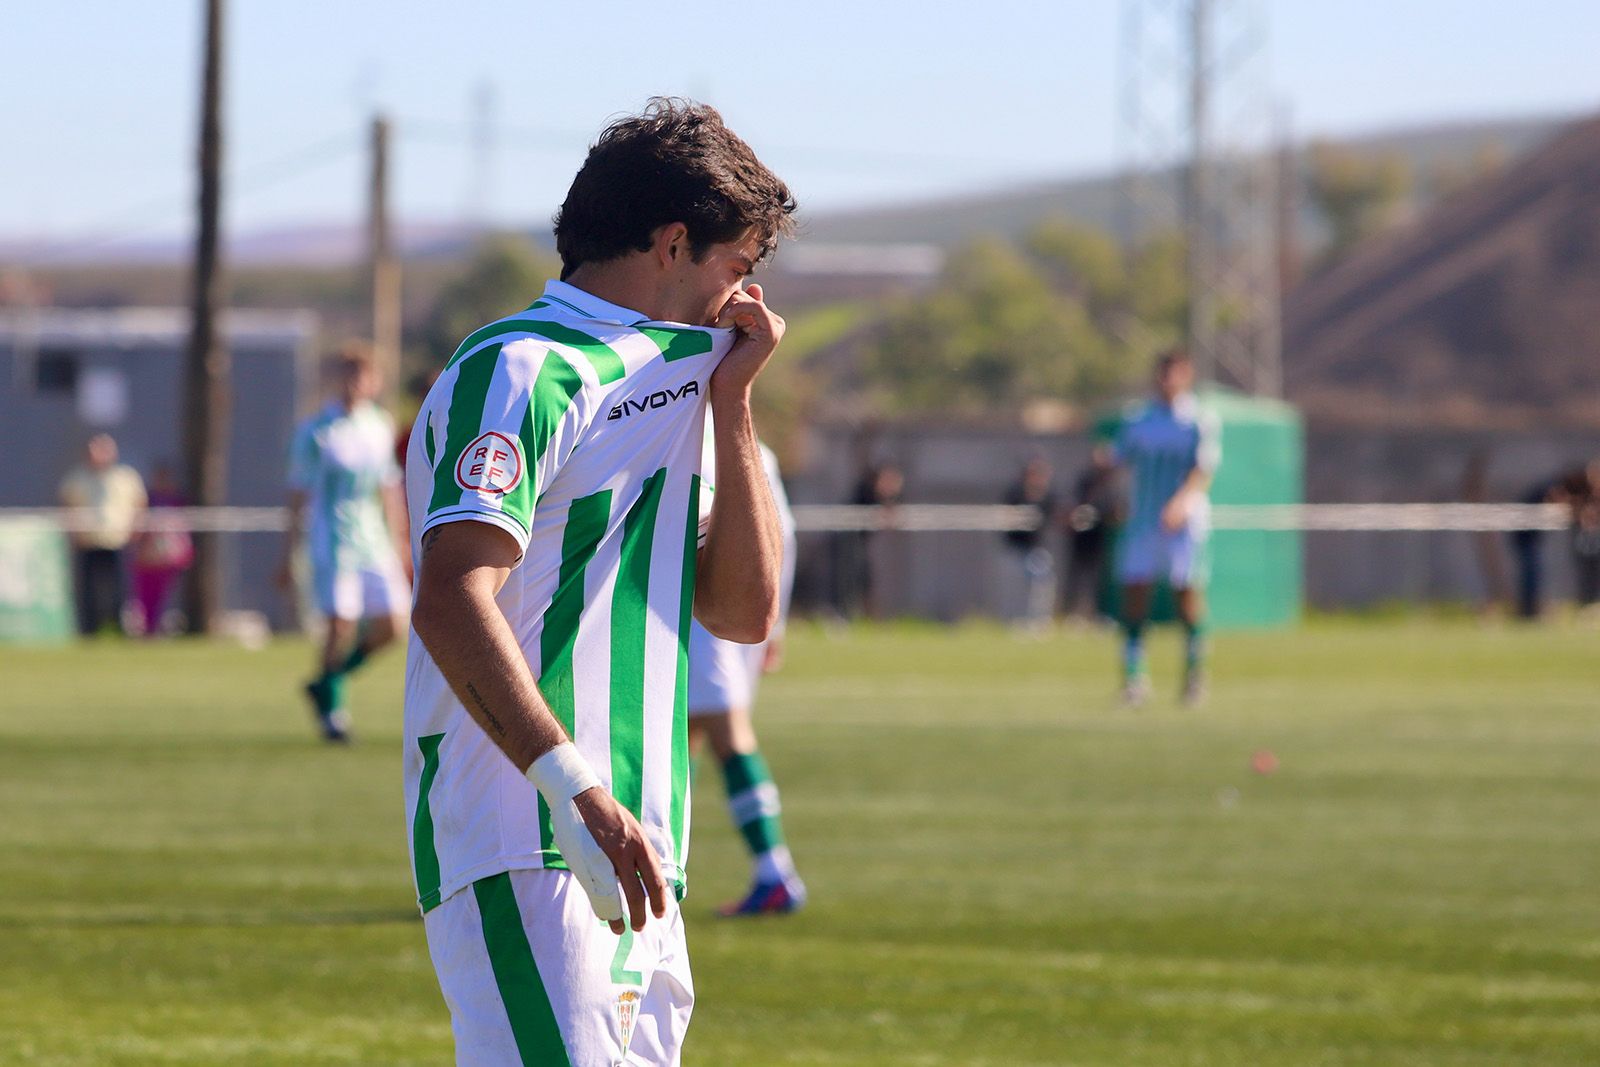 Córdoba CF B - La Palma: el partido de Tercera, en imágenes